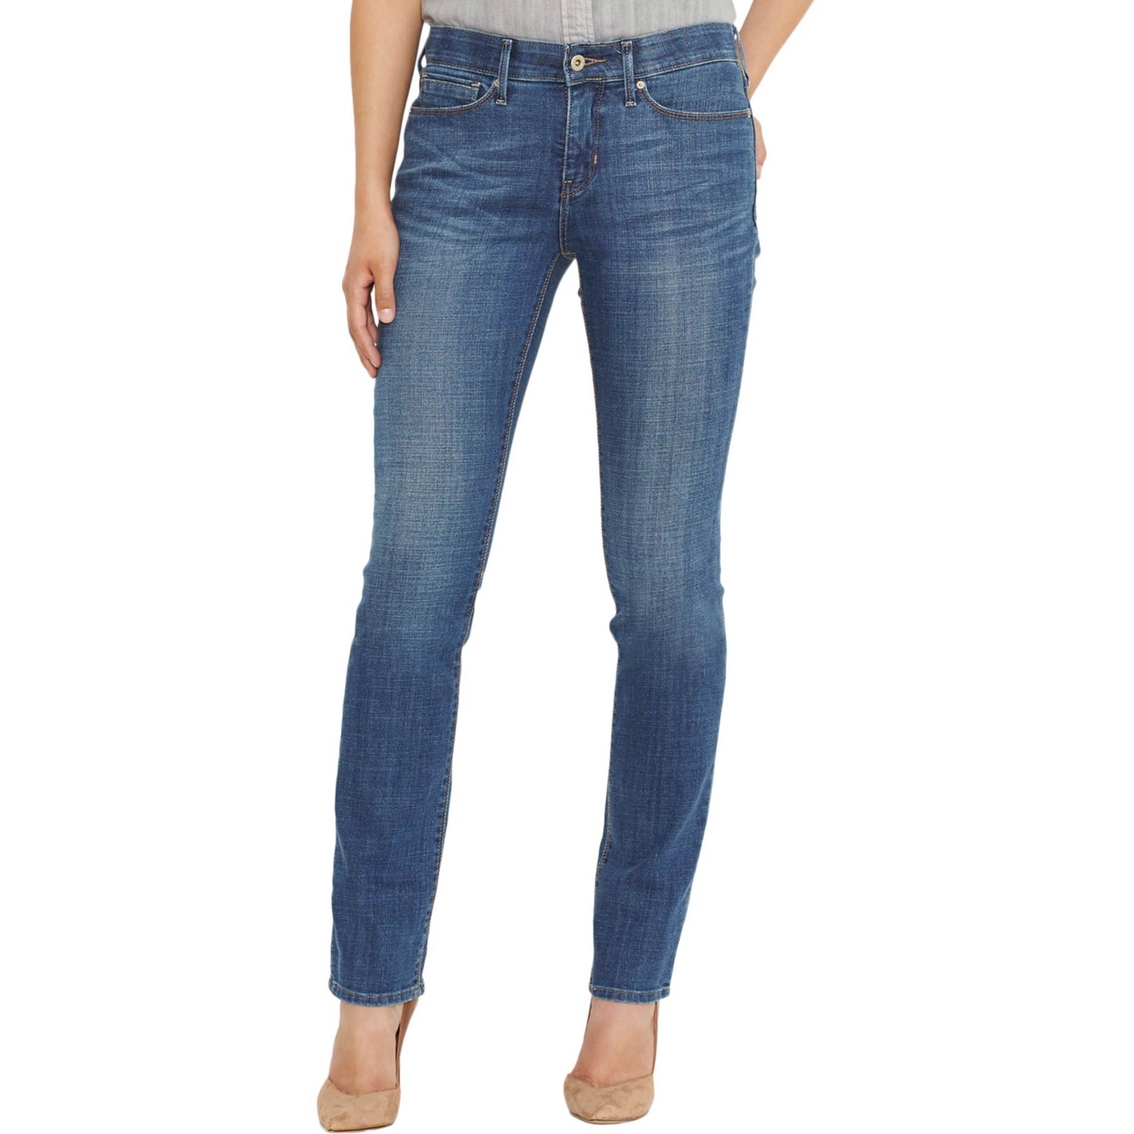 Levis 525 Perfect Waist Jeans Online, SAVE 56% 